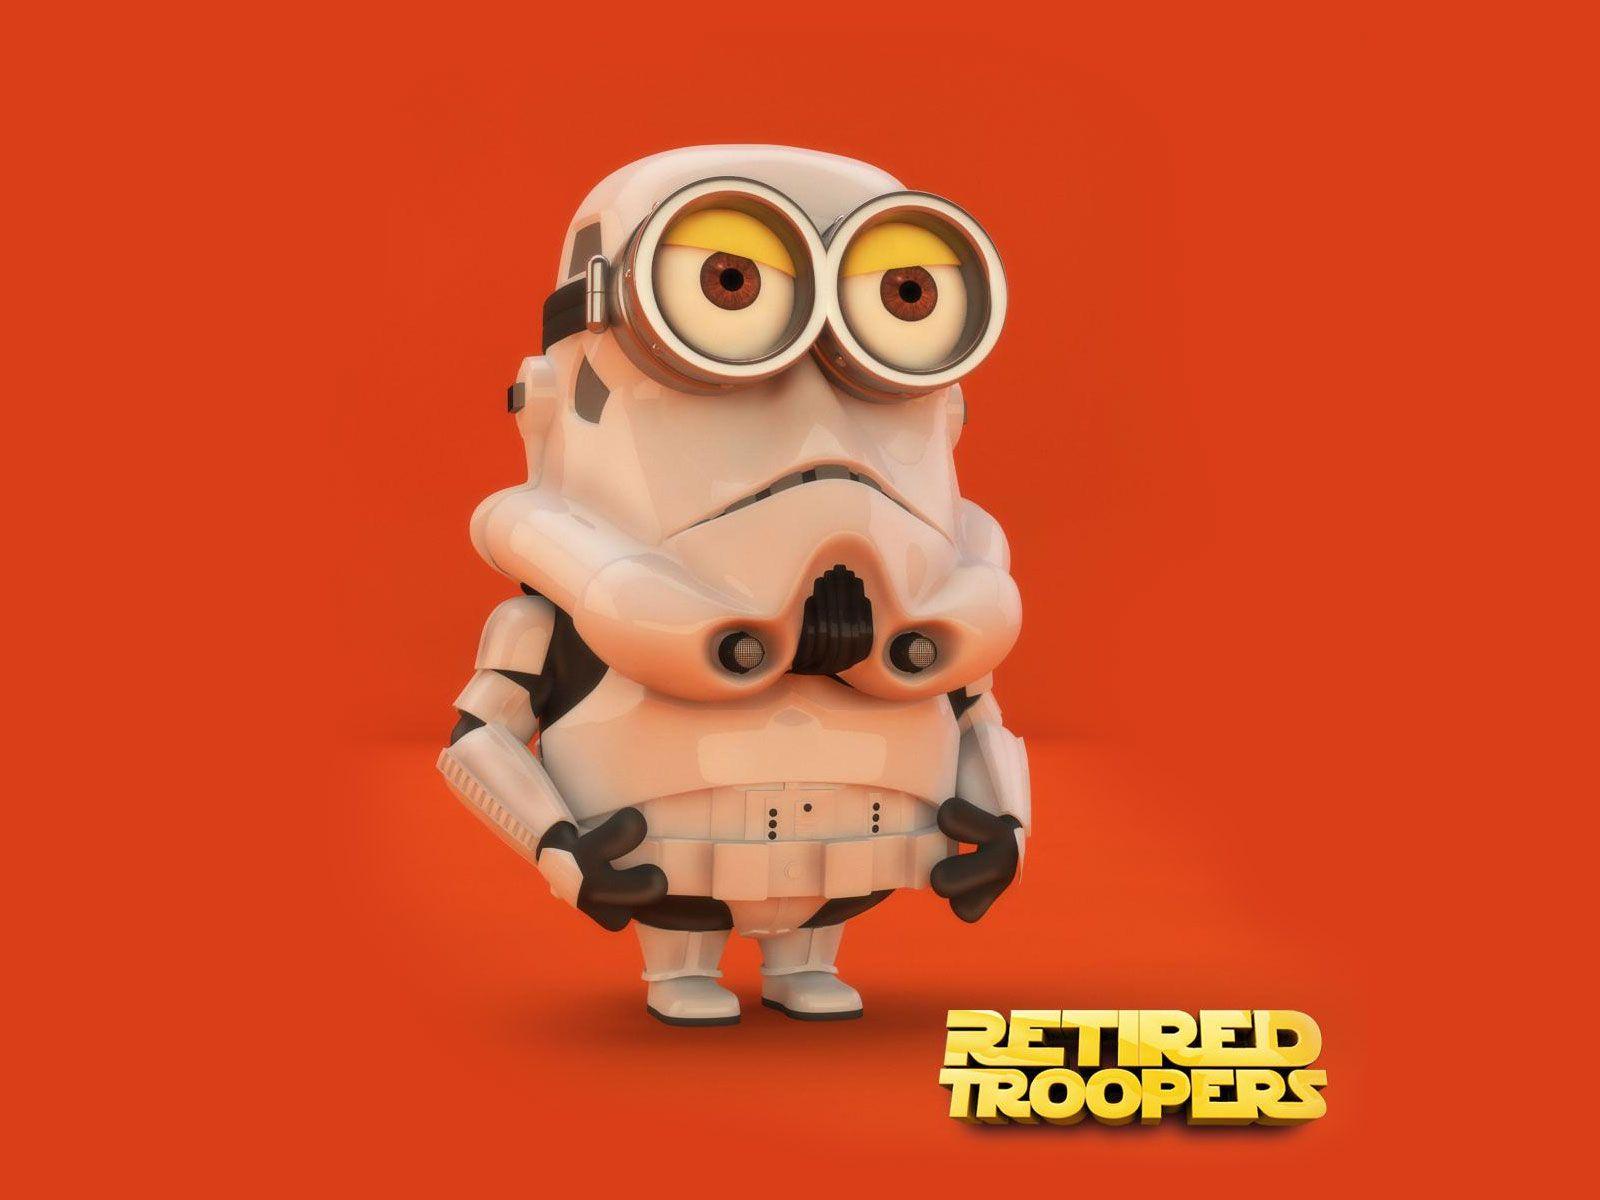 Minion Star Wars Storm Troopers. #Minions #StarWars #StormTroopers